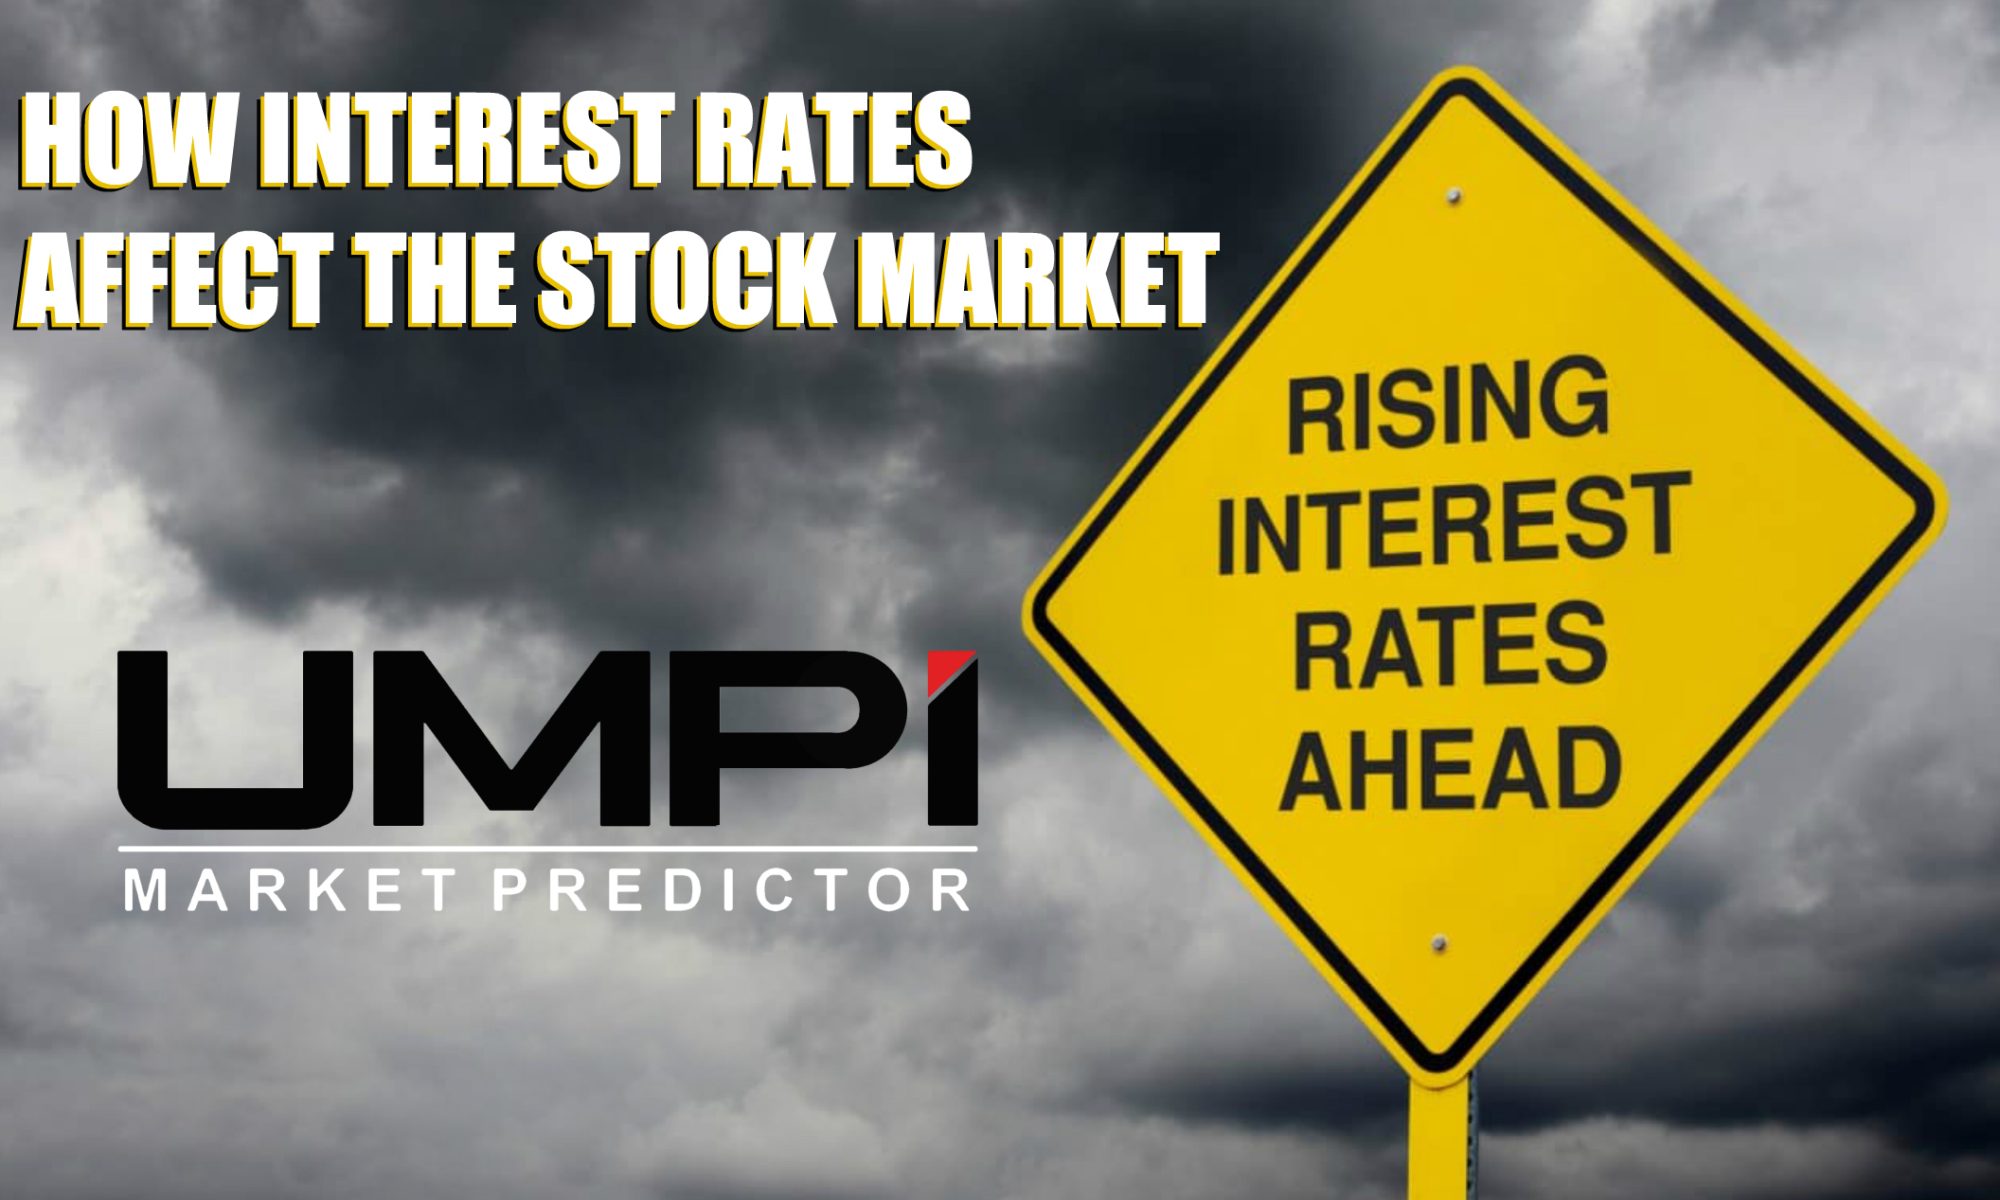 INTEREST RATES AFFECT STOCK MARKET